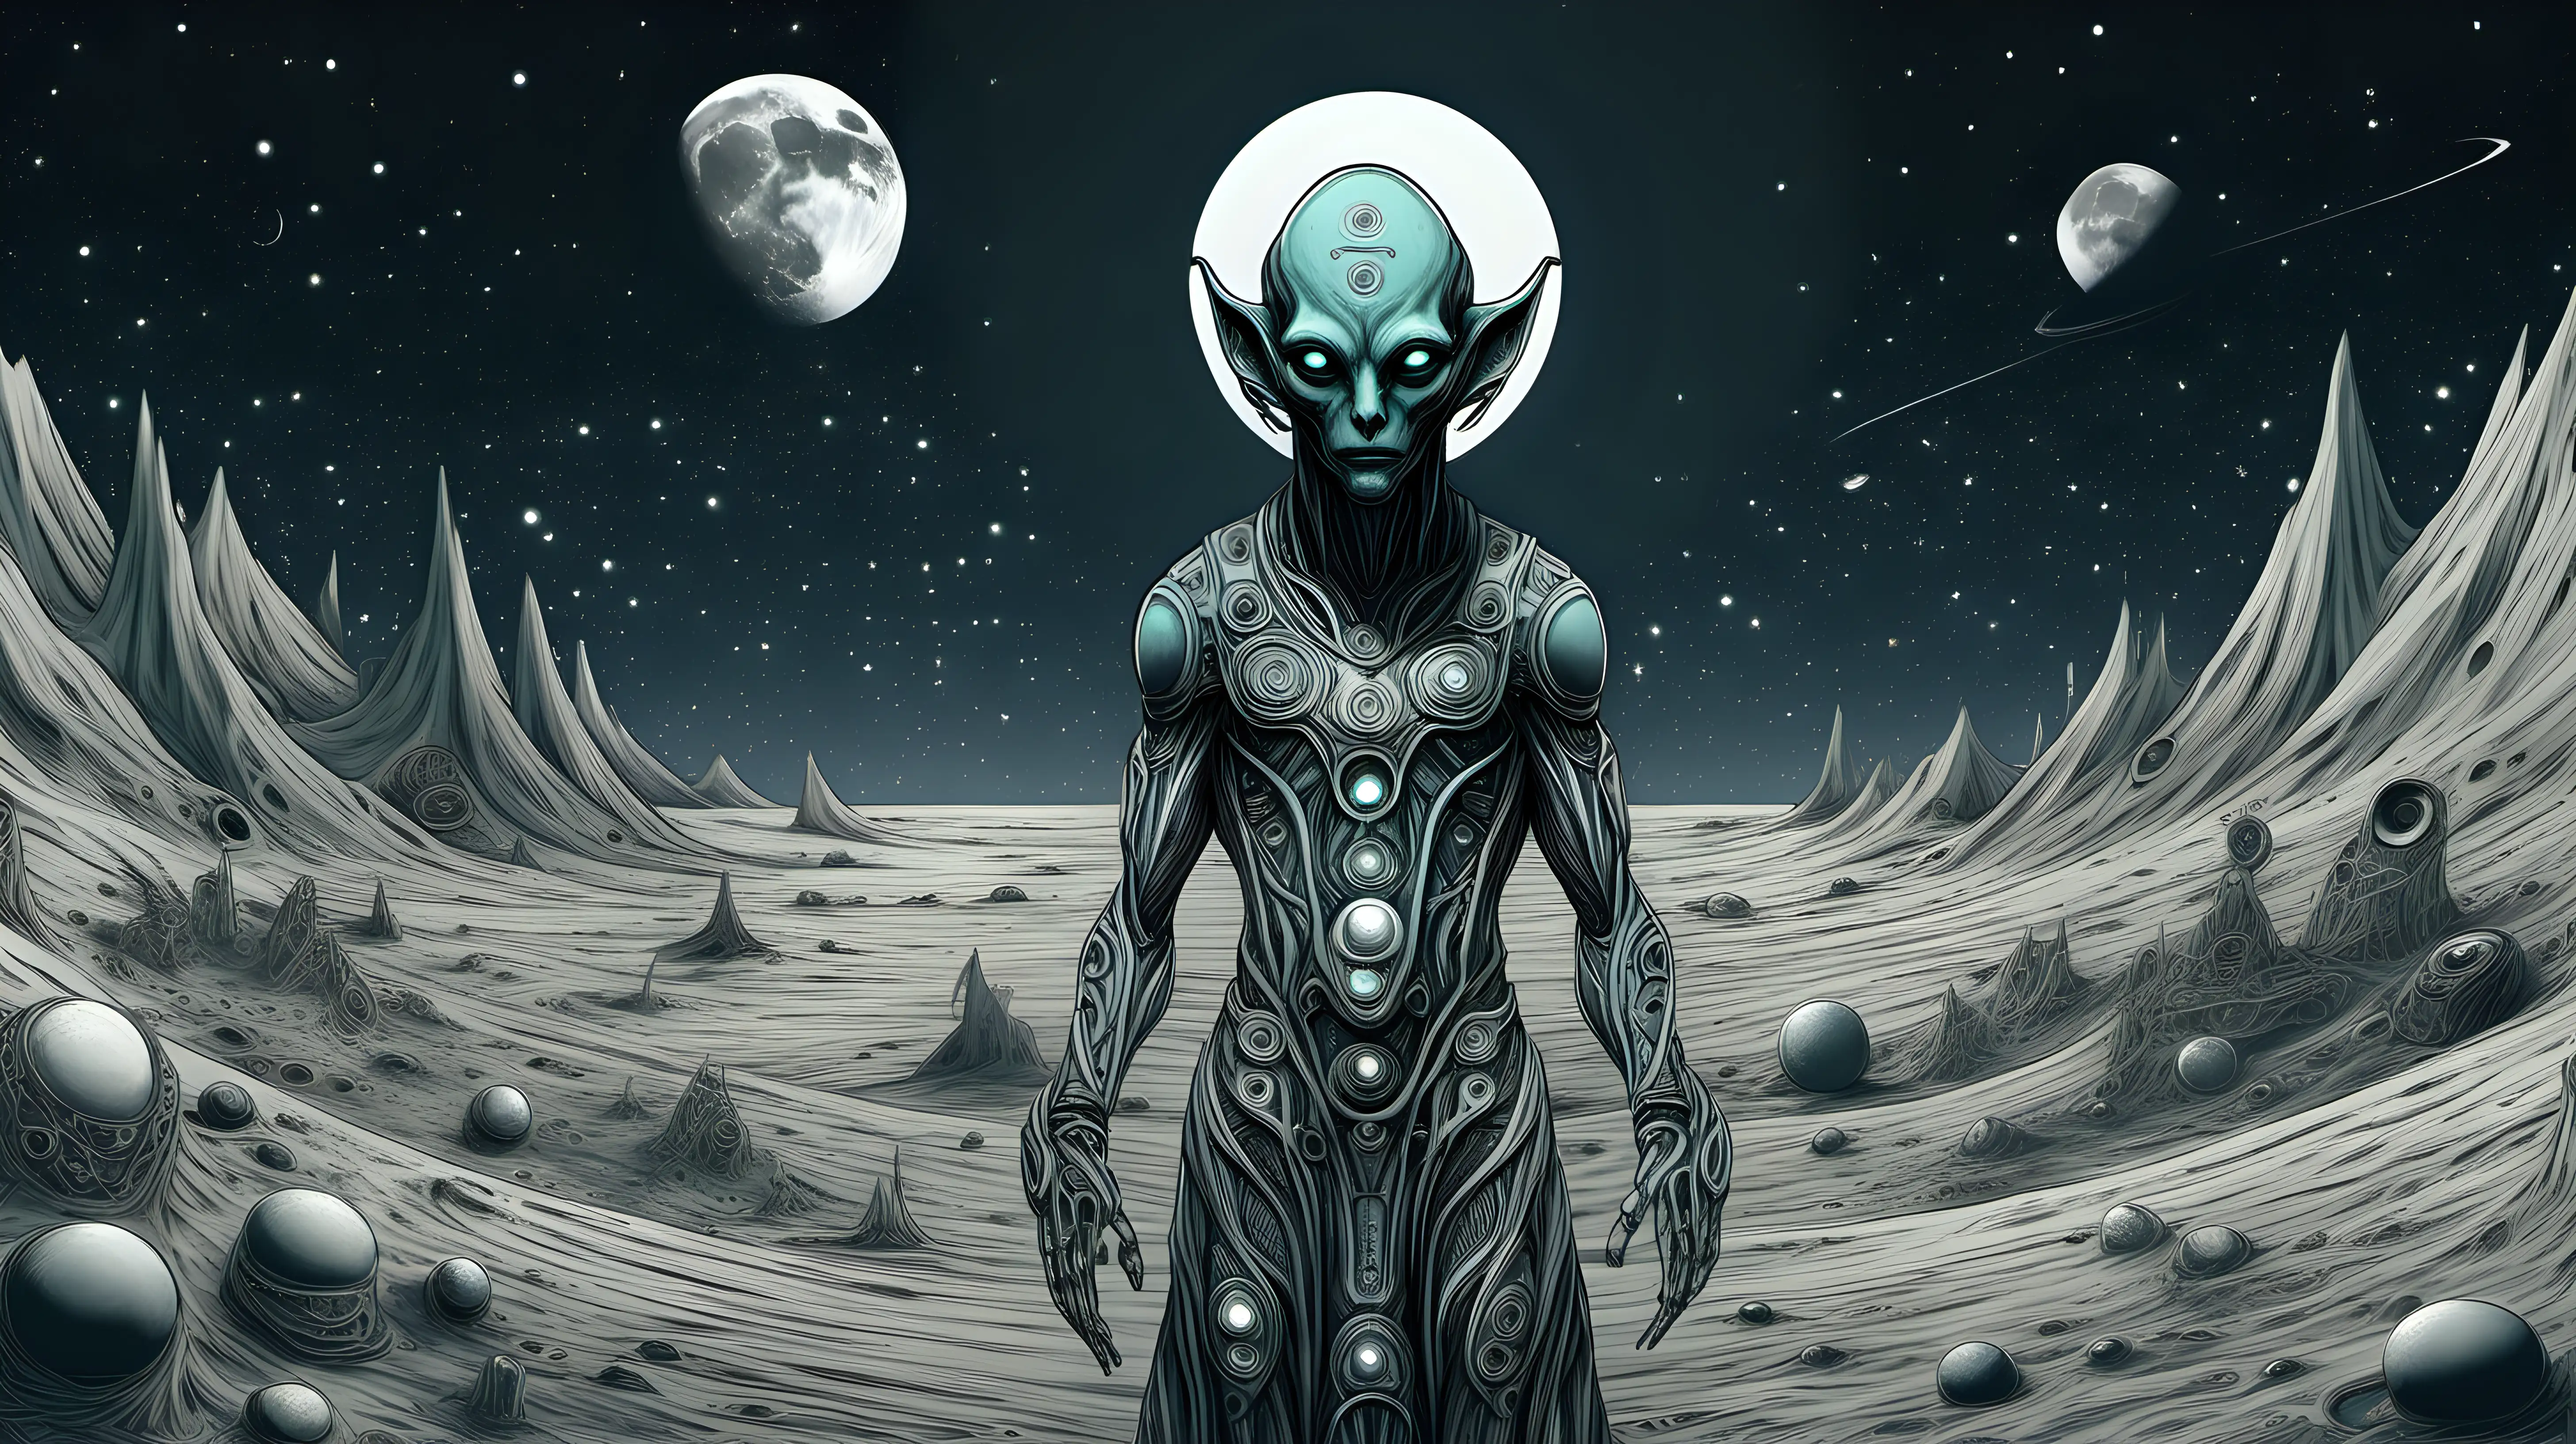 Lunarthemed humanoid alien adorned in celestial patterns